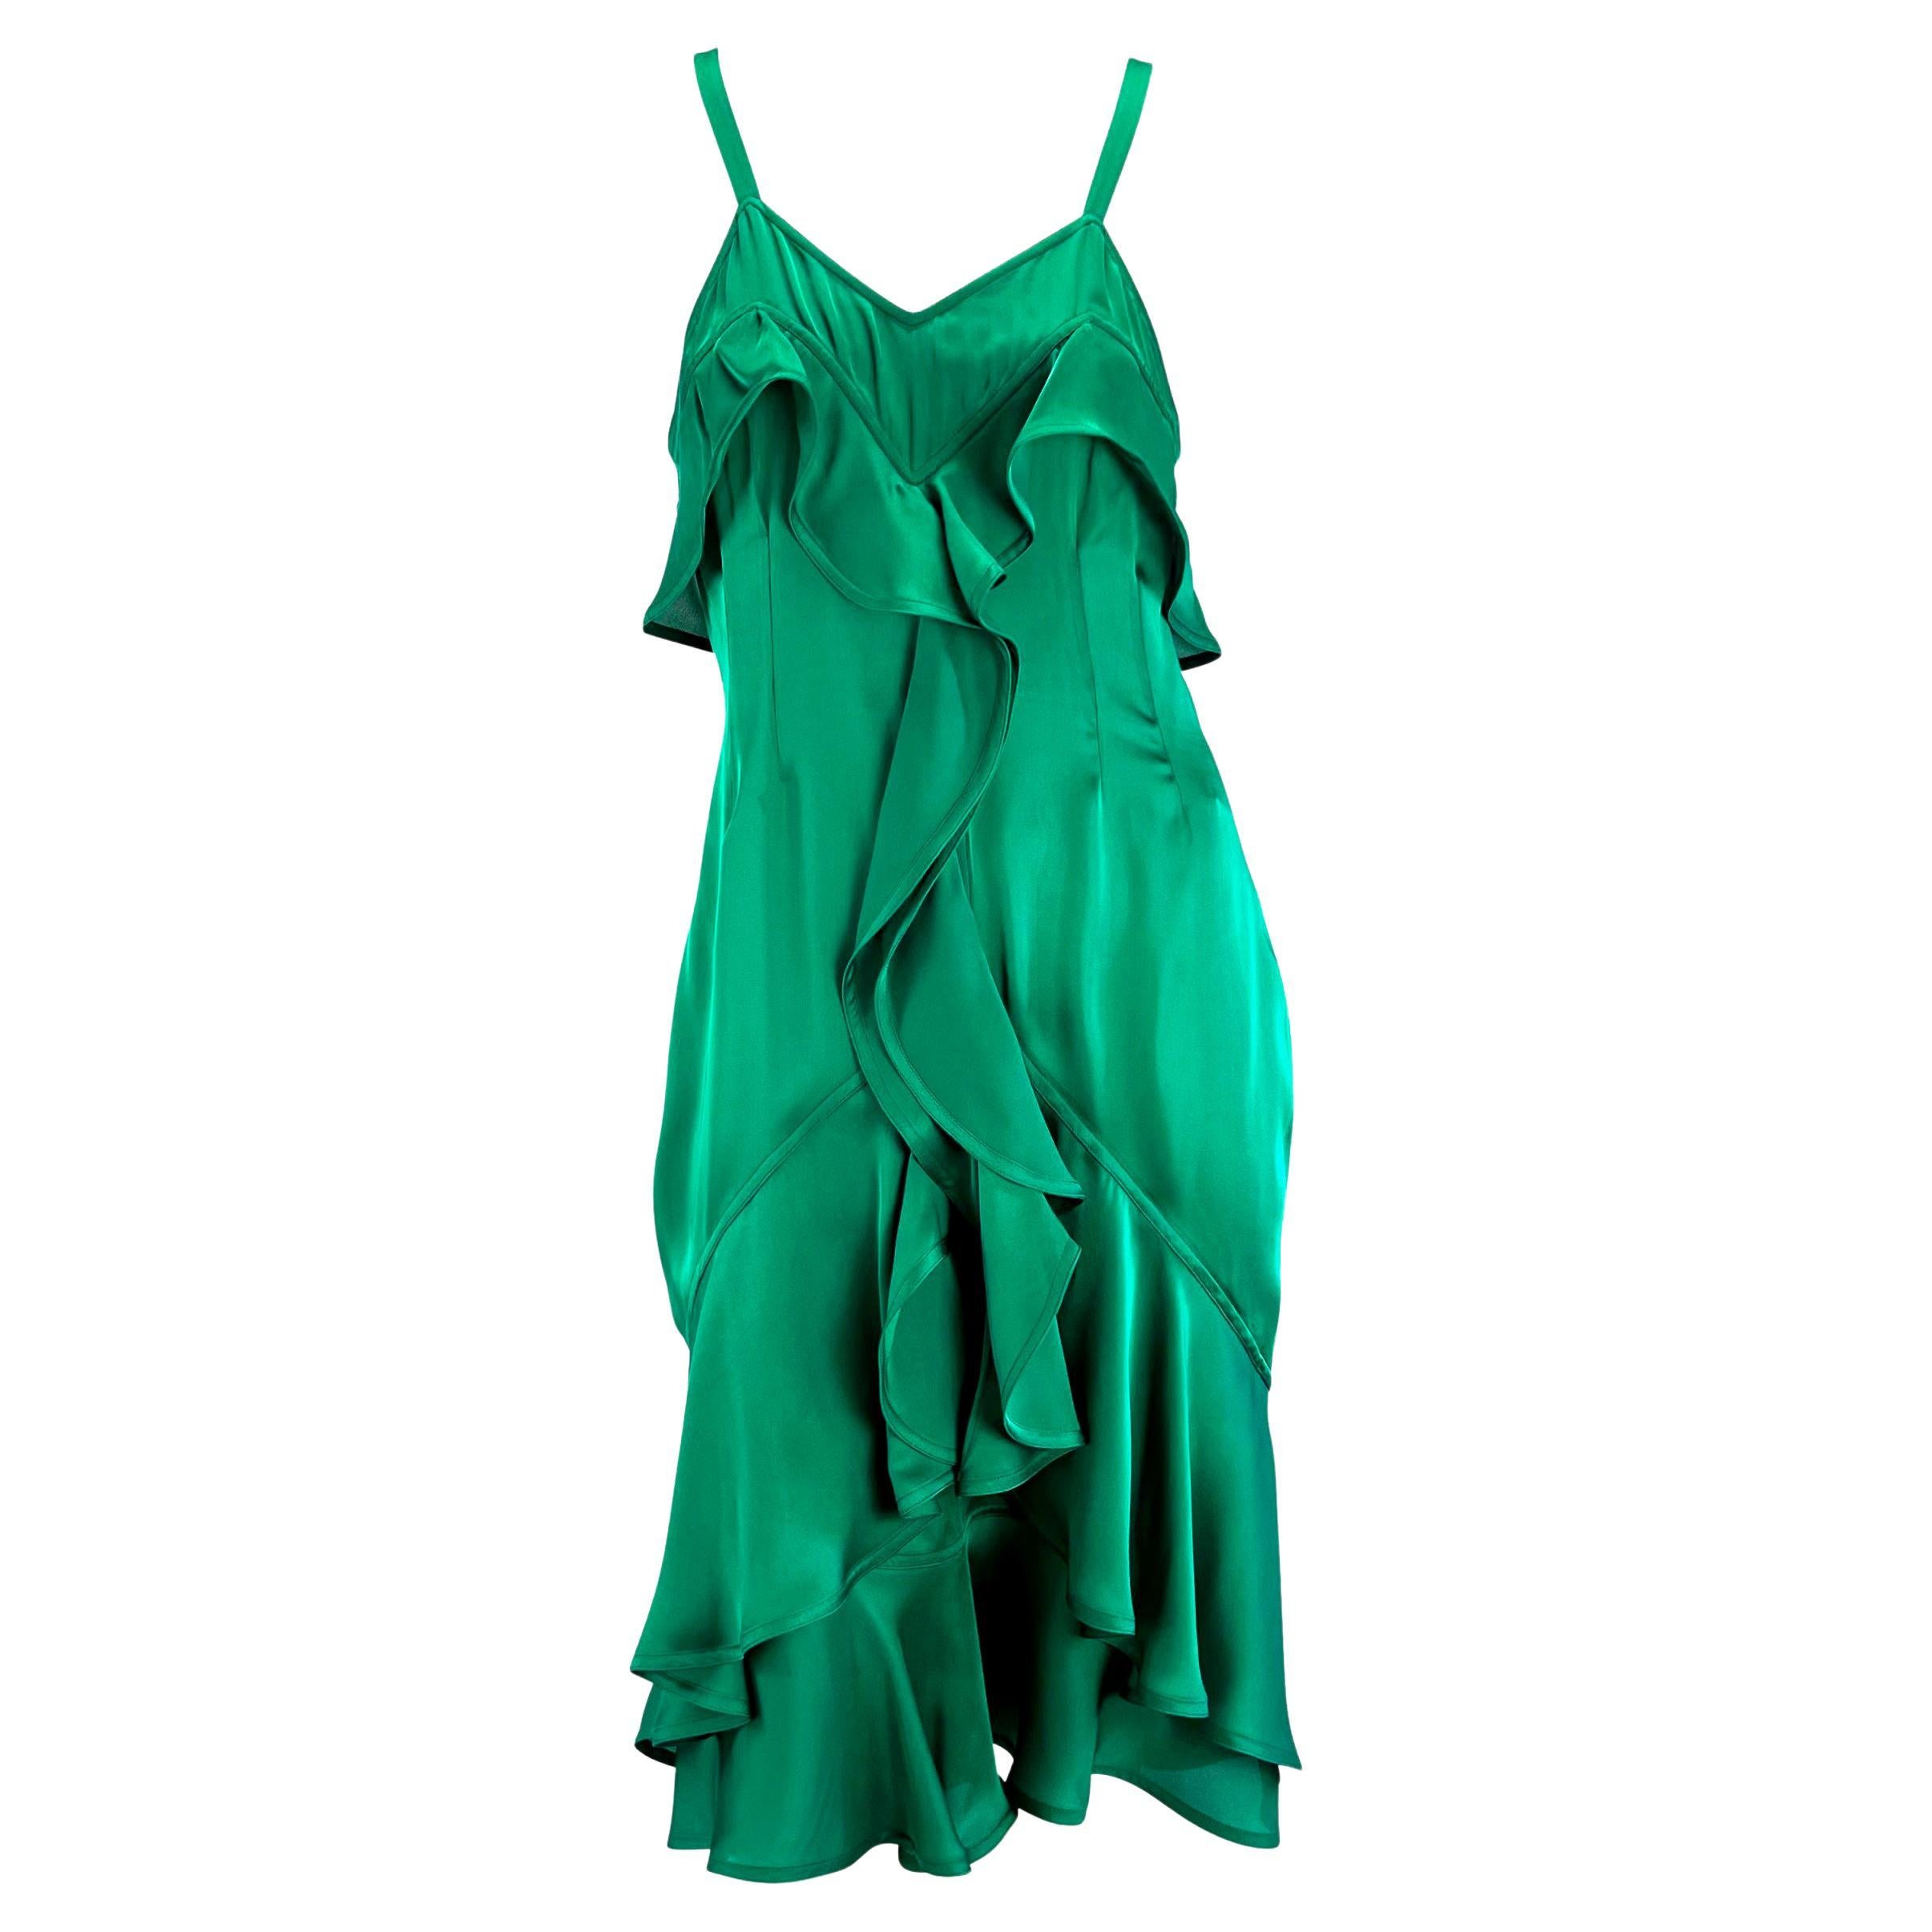 F/W 2003 Yves Saint Laurent by Tom Ford Runway Emerald Green Ruffle Silk Dress For Sale